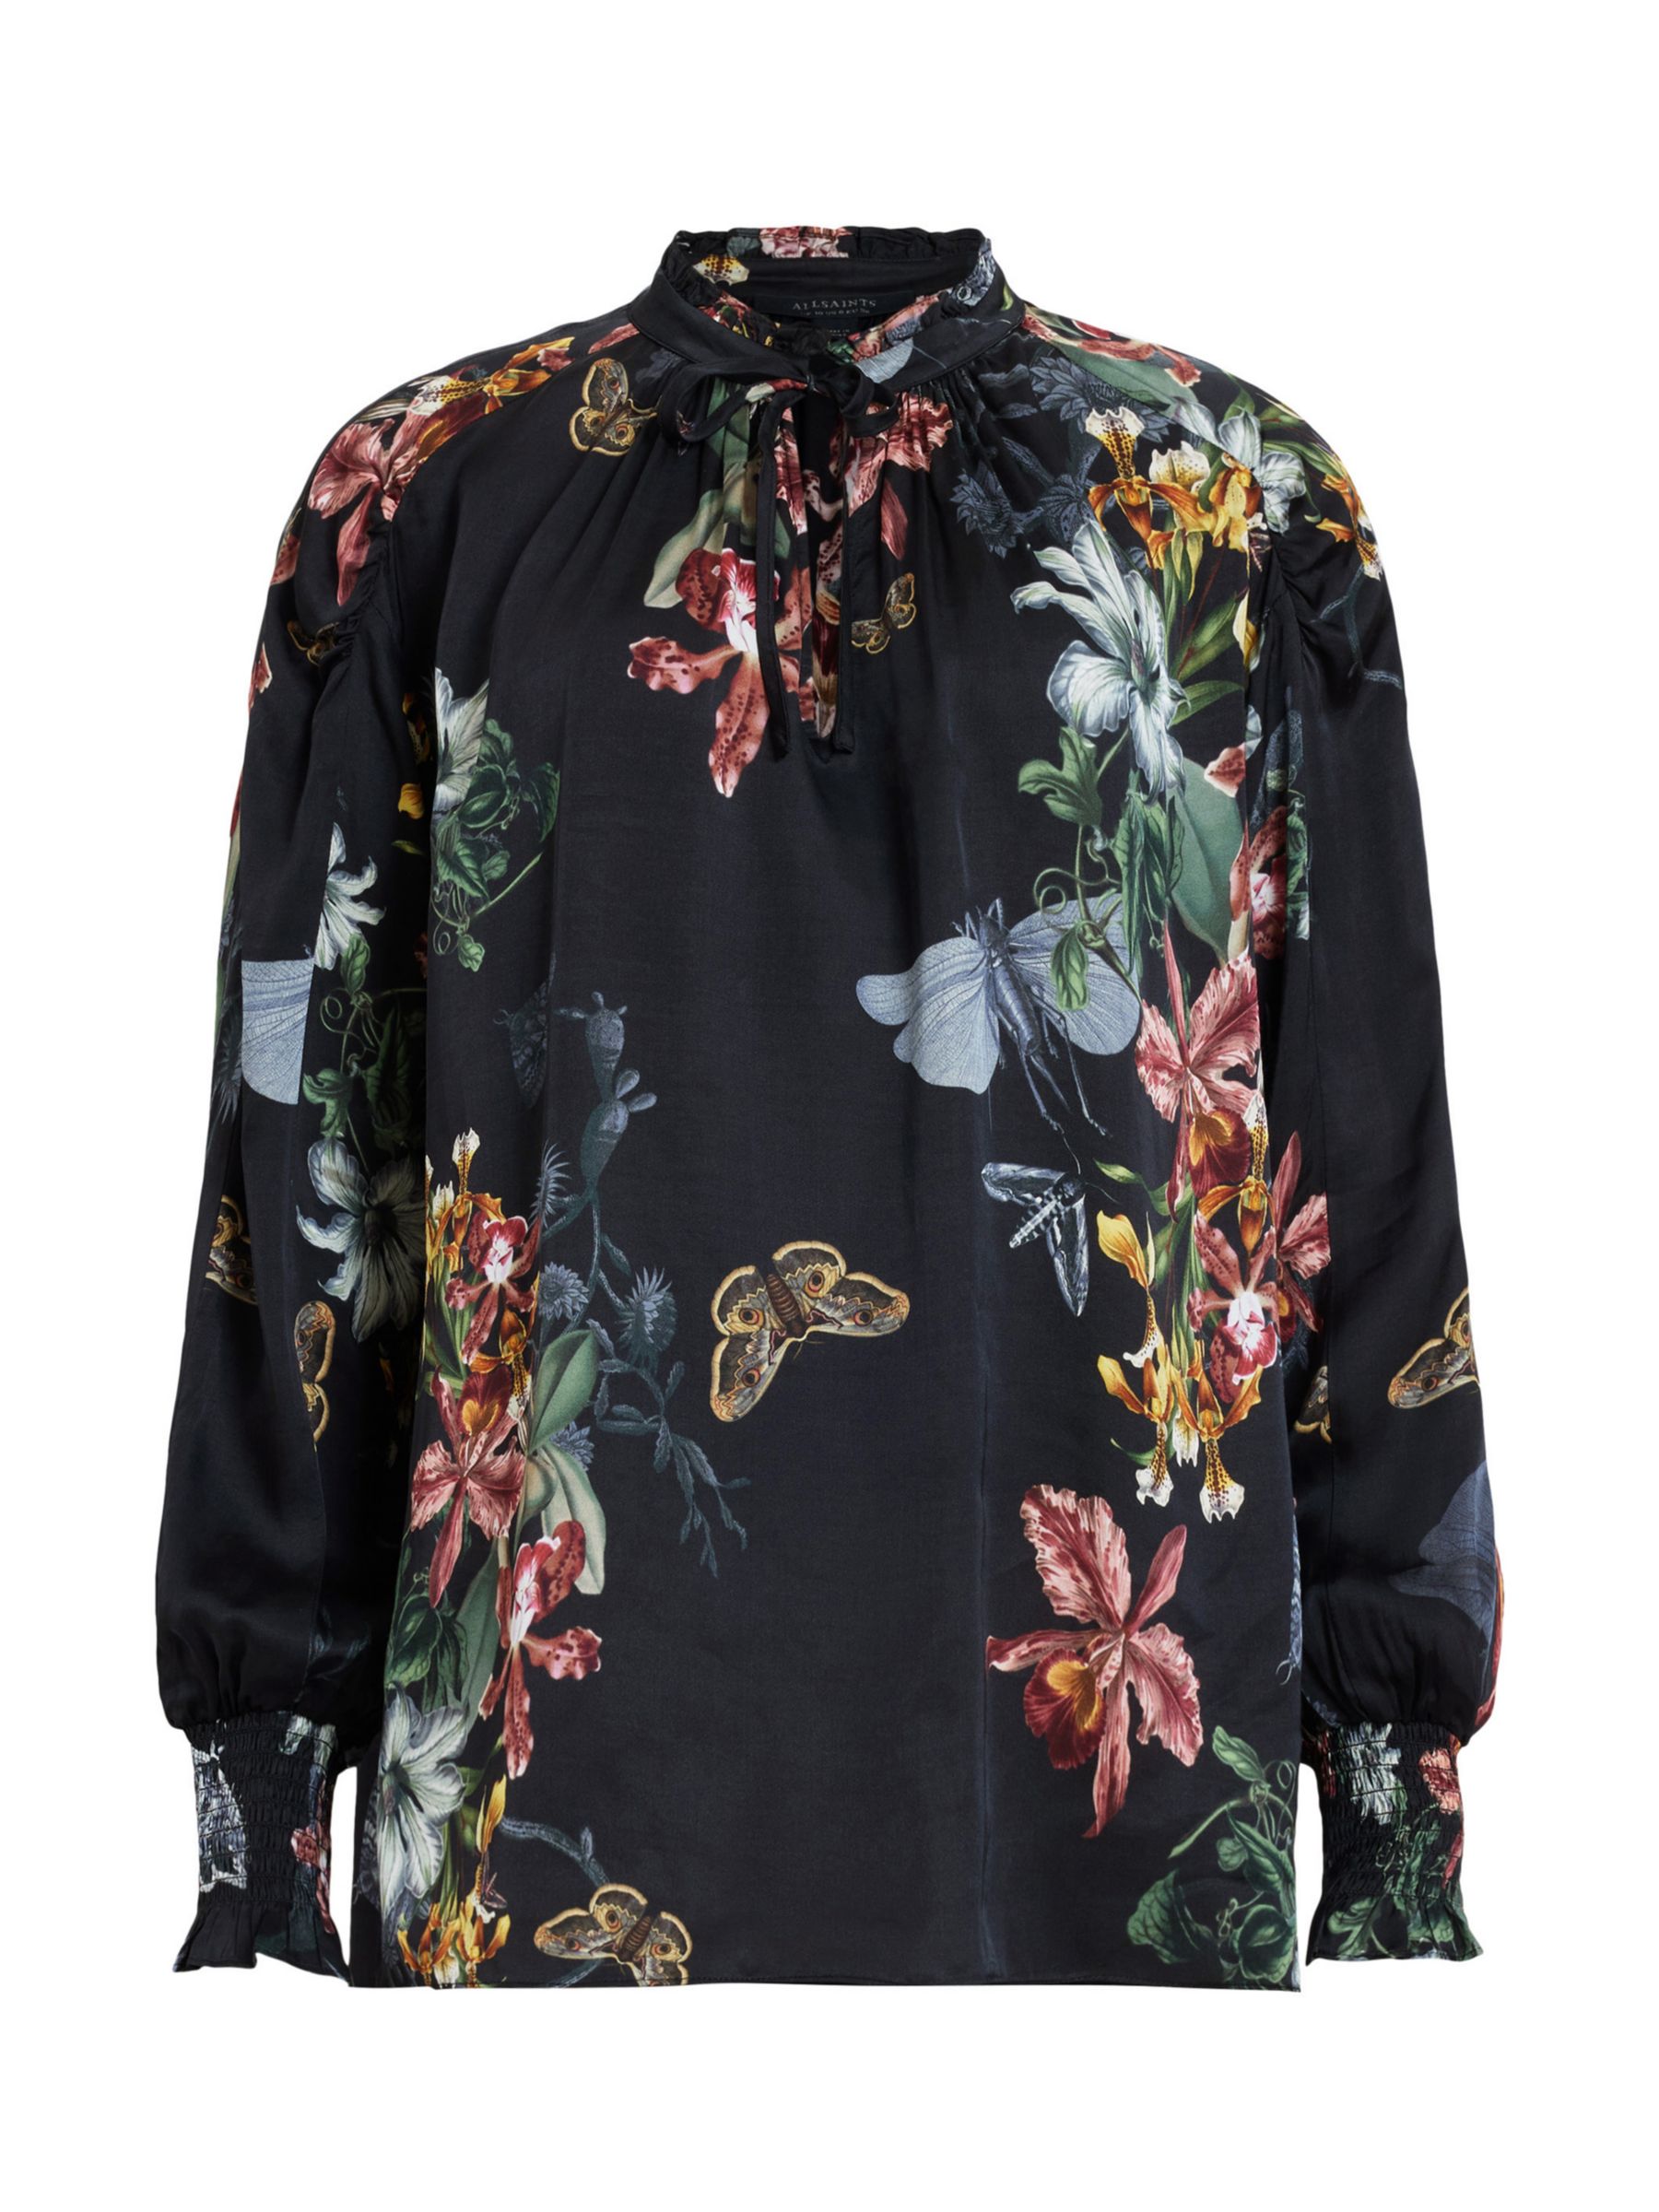 Buy AllSaints Mara Sanibel Floral Butterfly Print Blouse, Black/Multi Online at johnlewis.com